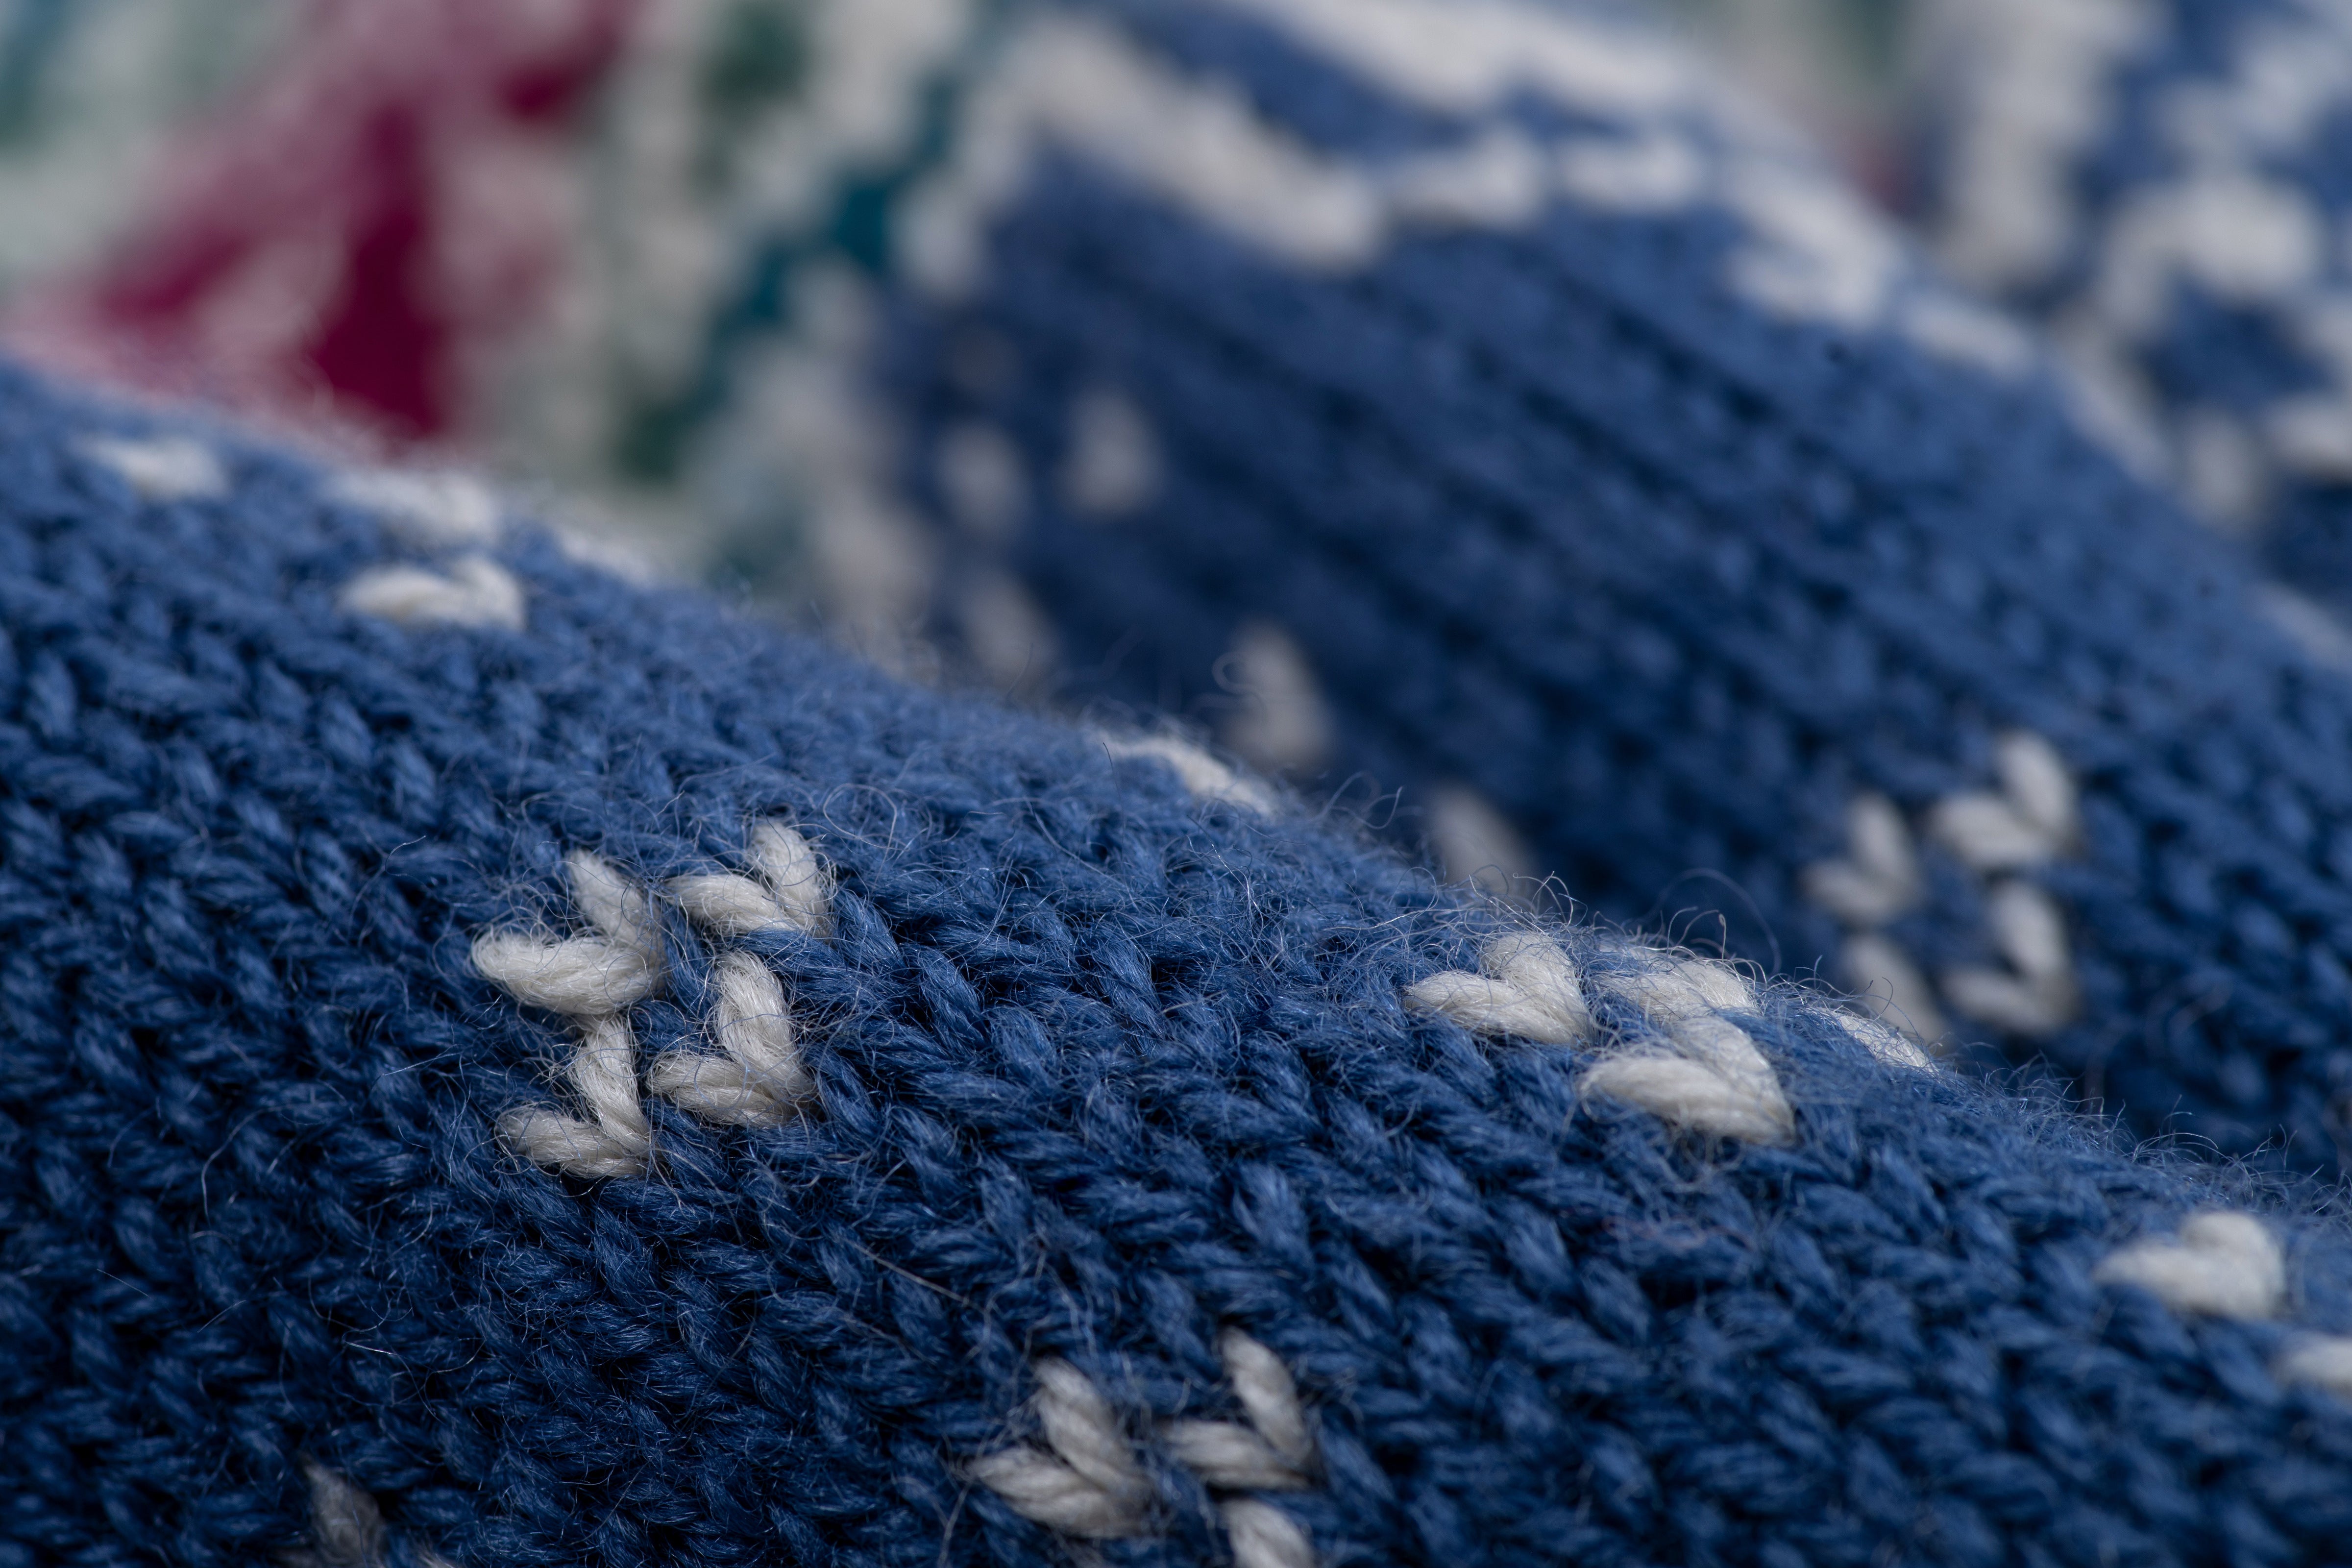 Women's Nordic Wool Fair Isle Mock Neck Sweater, XL